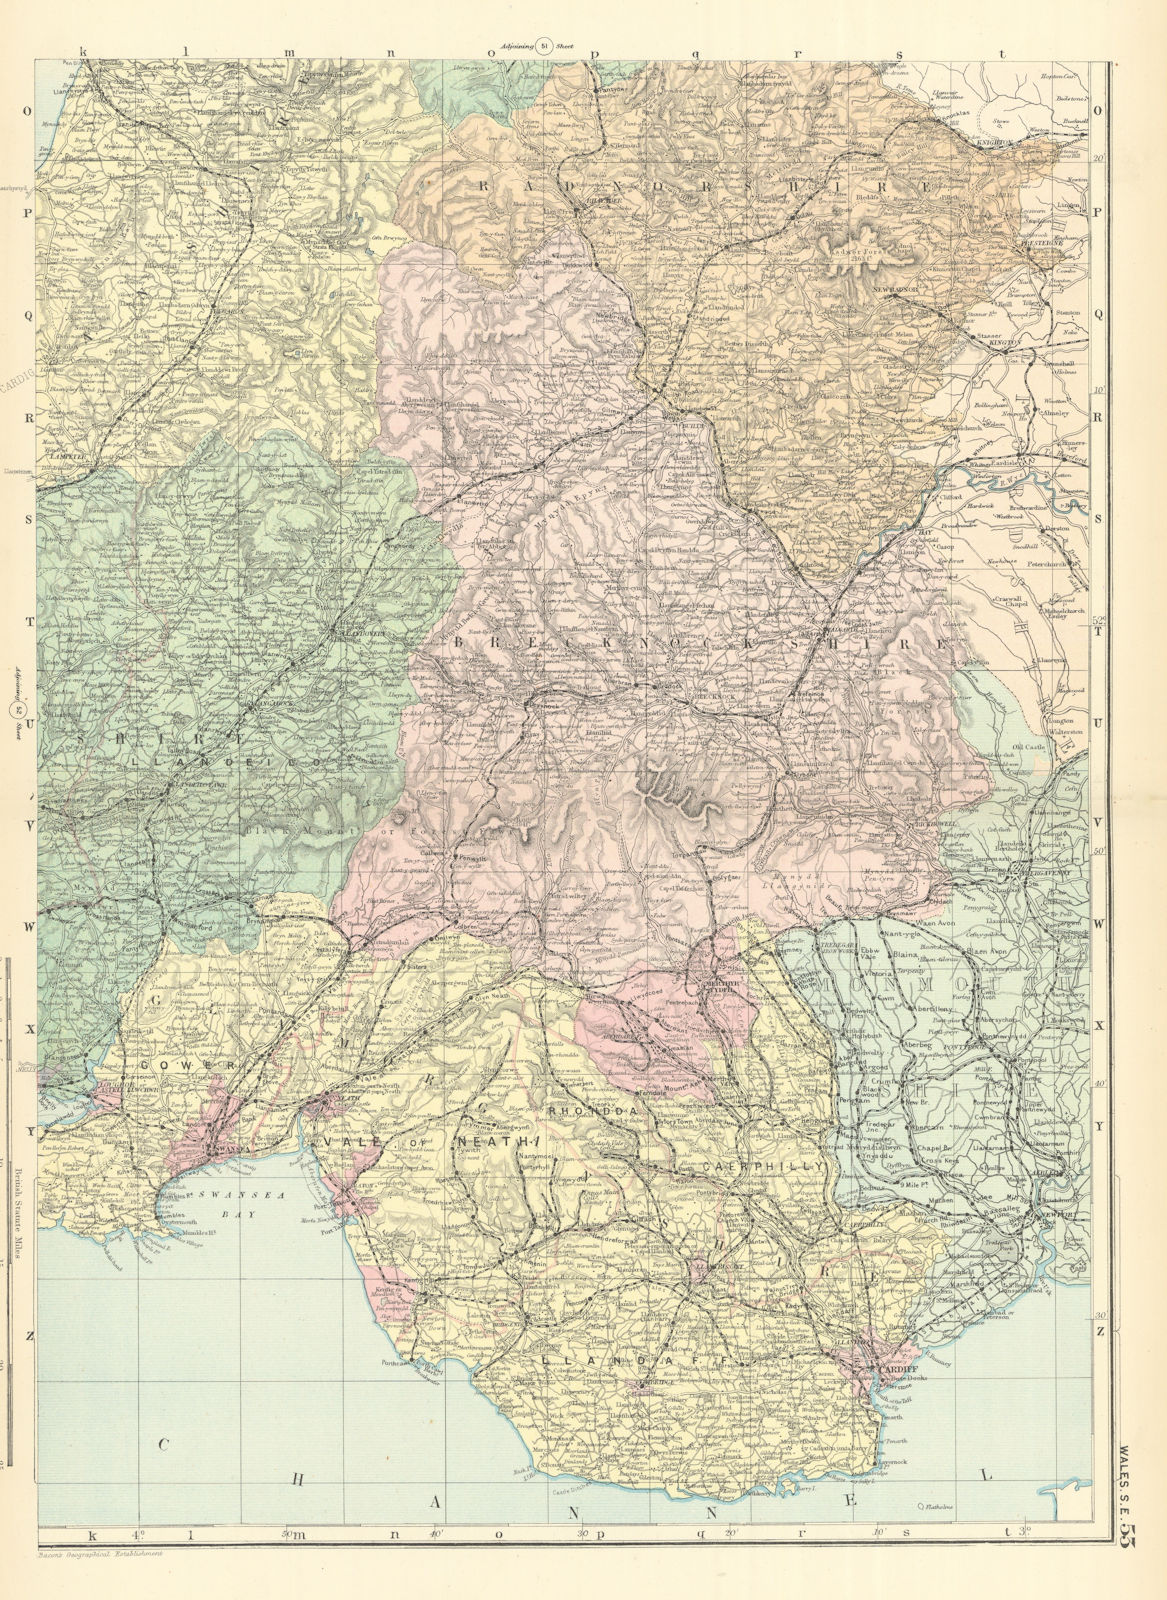 WALES (South East) Glamorgan Brecknock Radnorshire Powys GW BACON 1891 old map